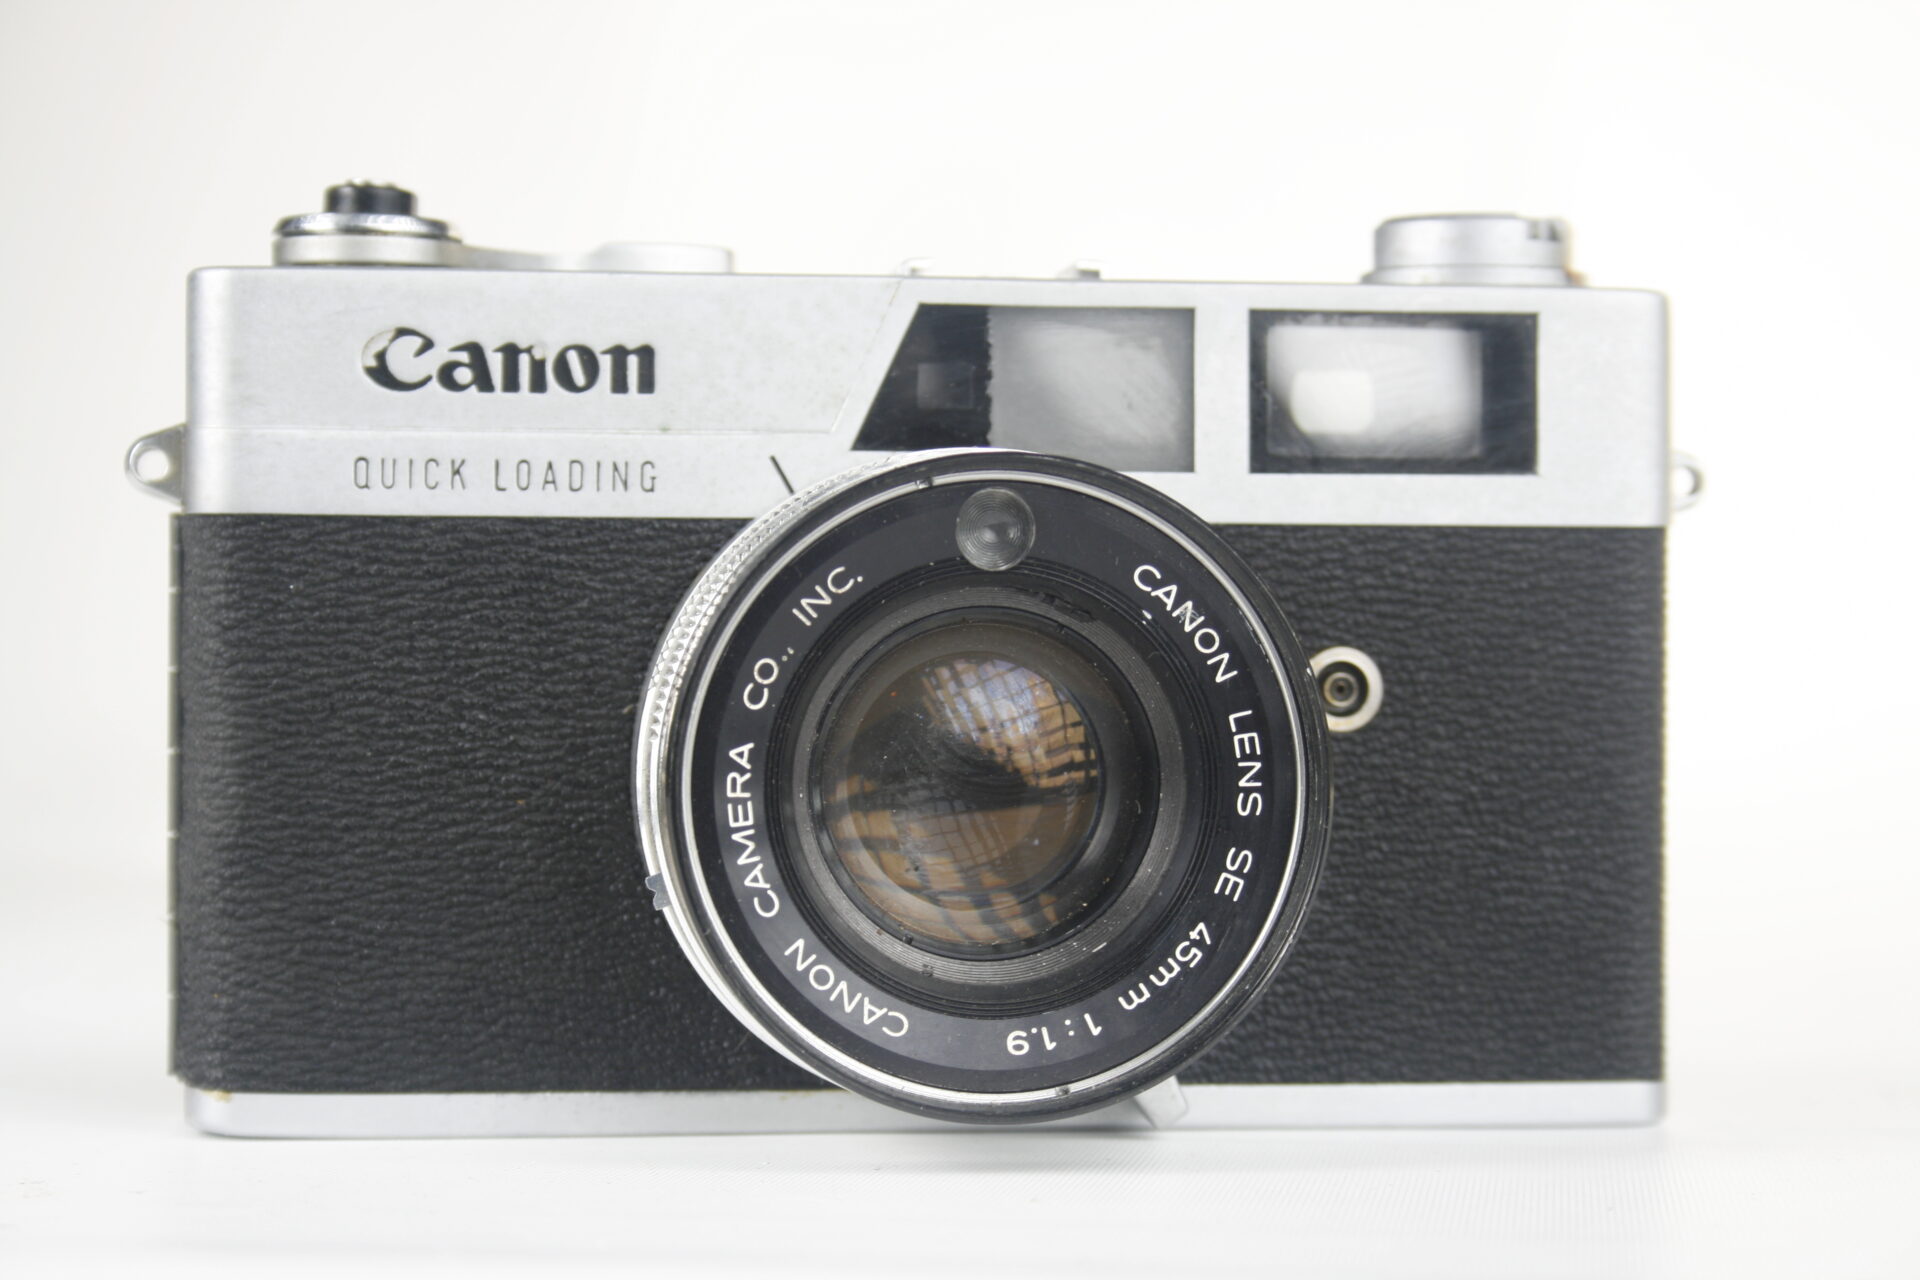 Canon Canonet QL19. 35mm ragefinder camera. 1965. Japan.